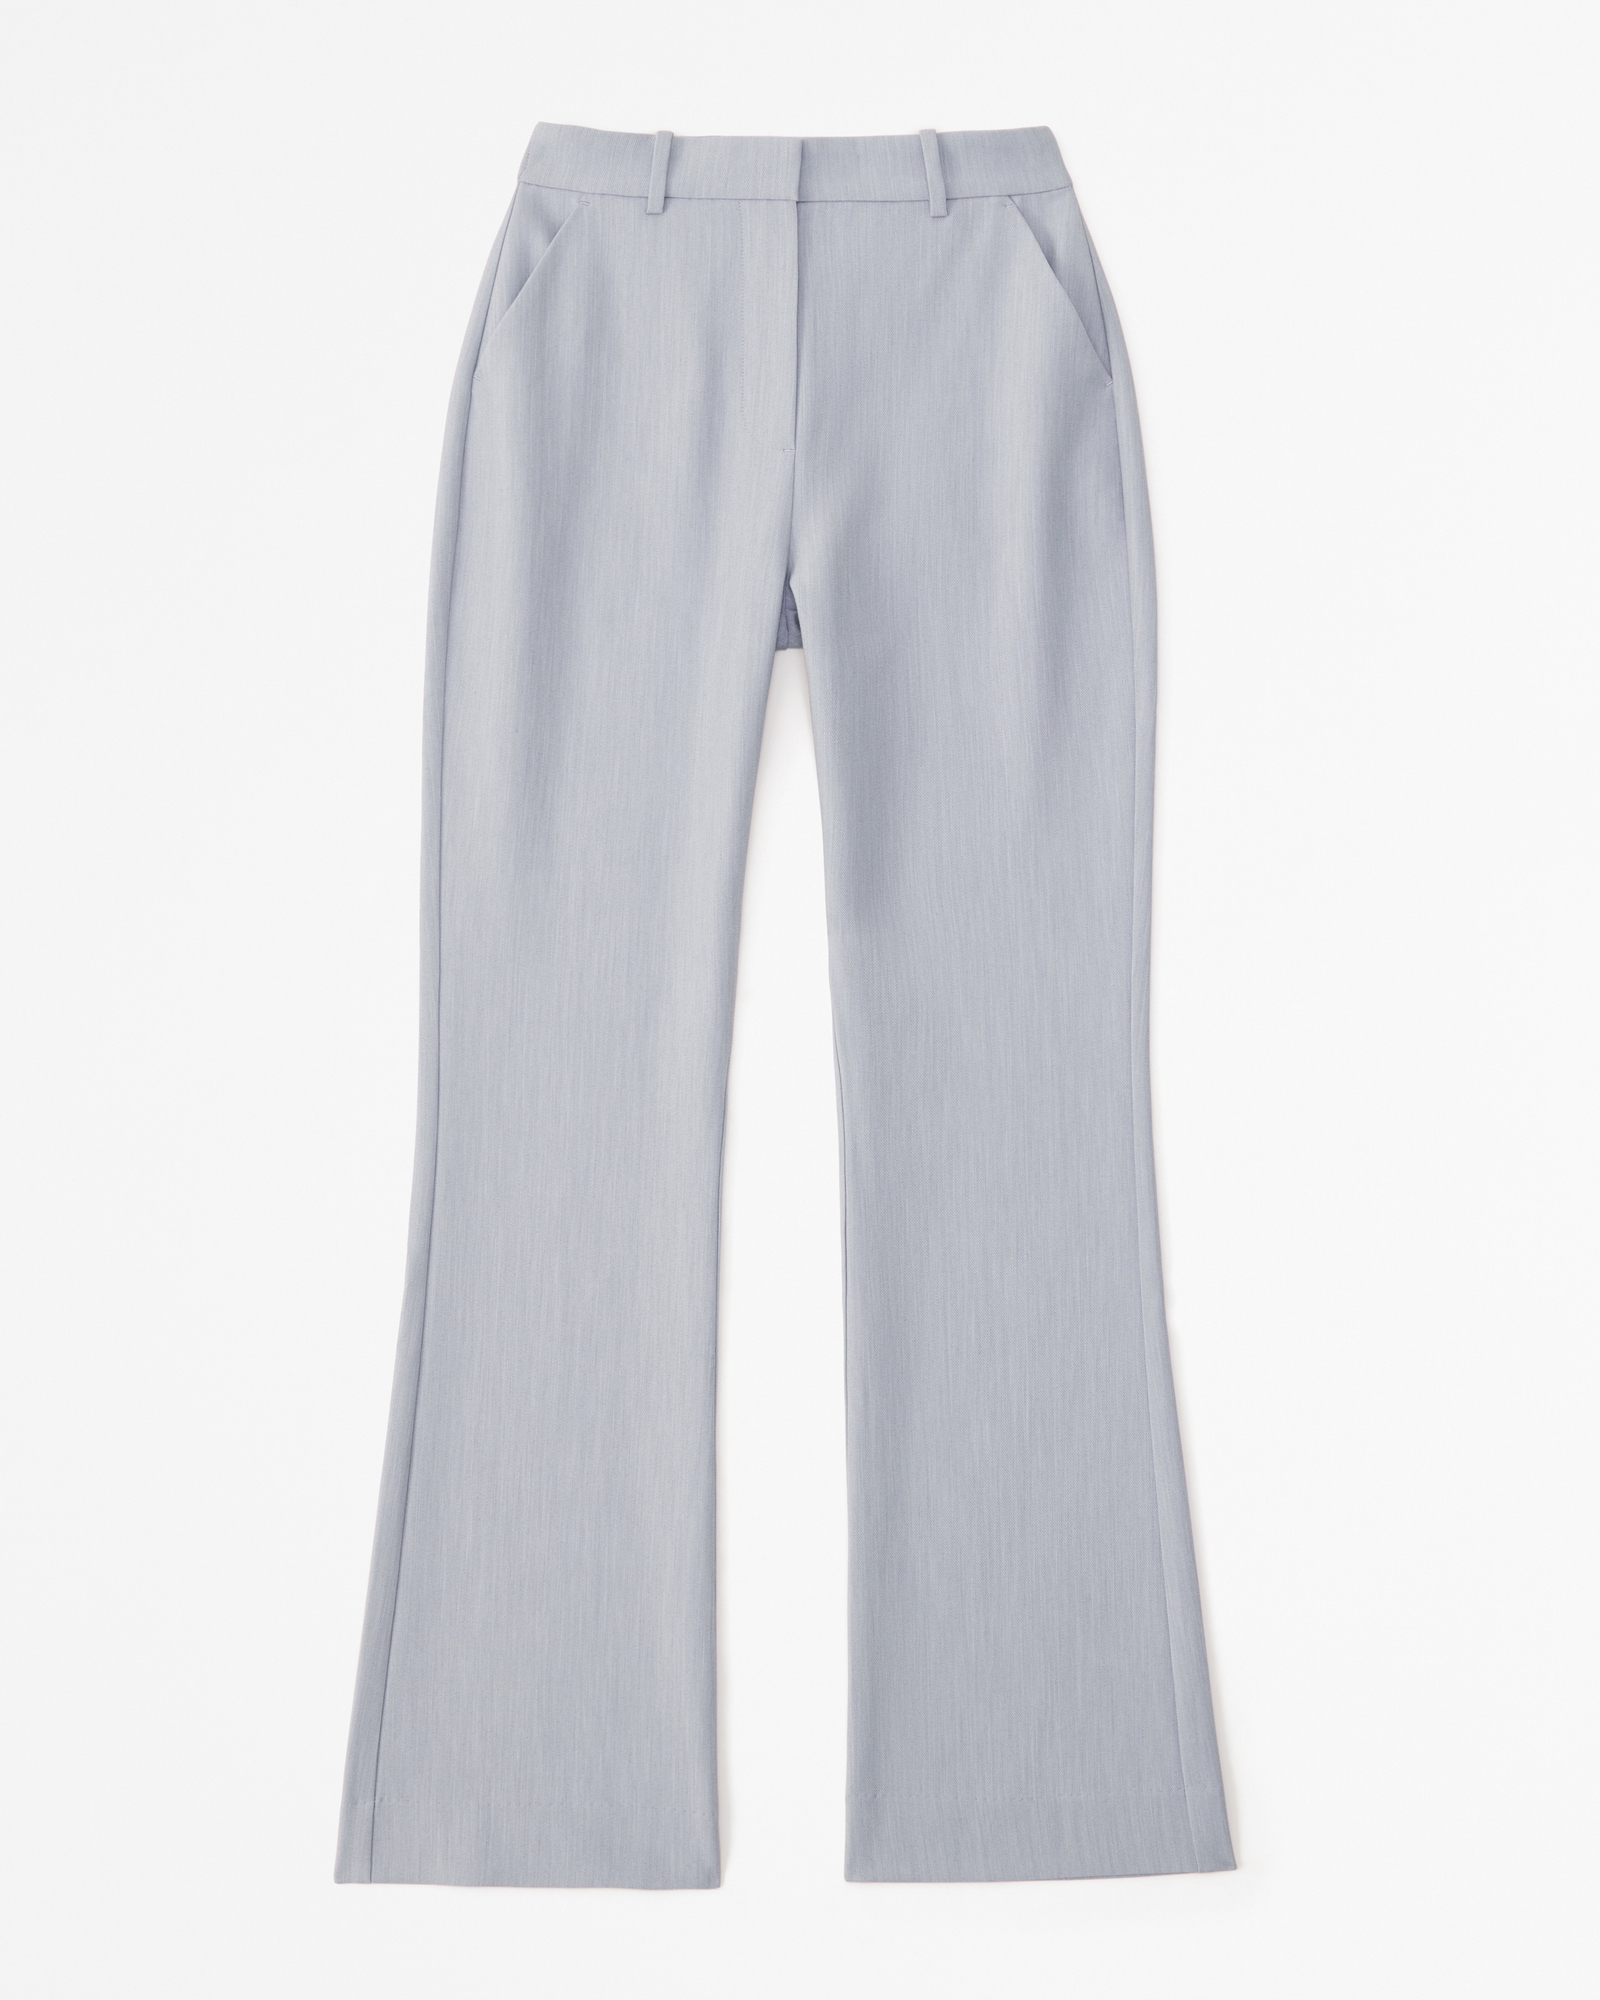 L'Autre Chose Flared Trousers, $386, farfetch.com